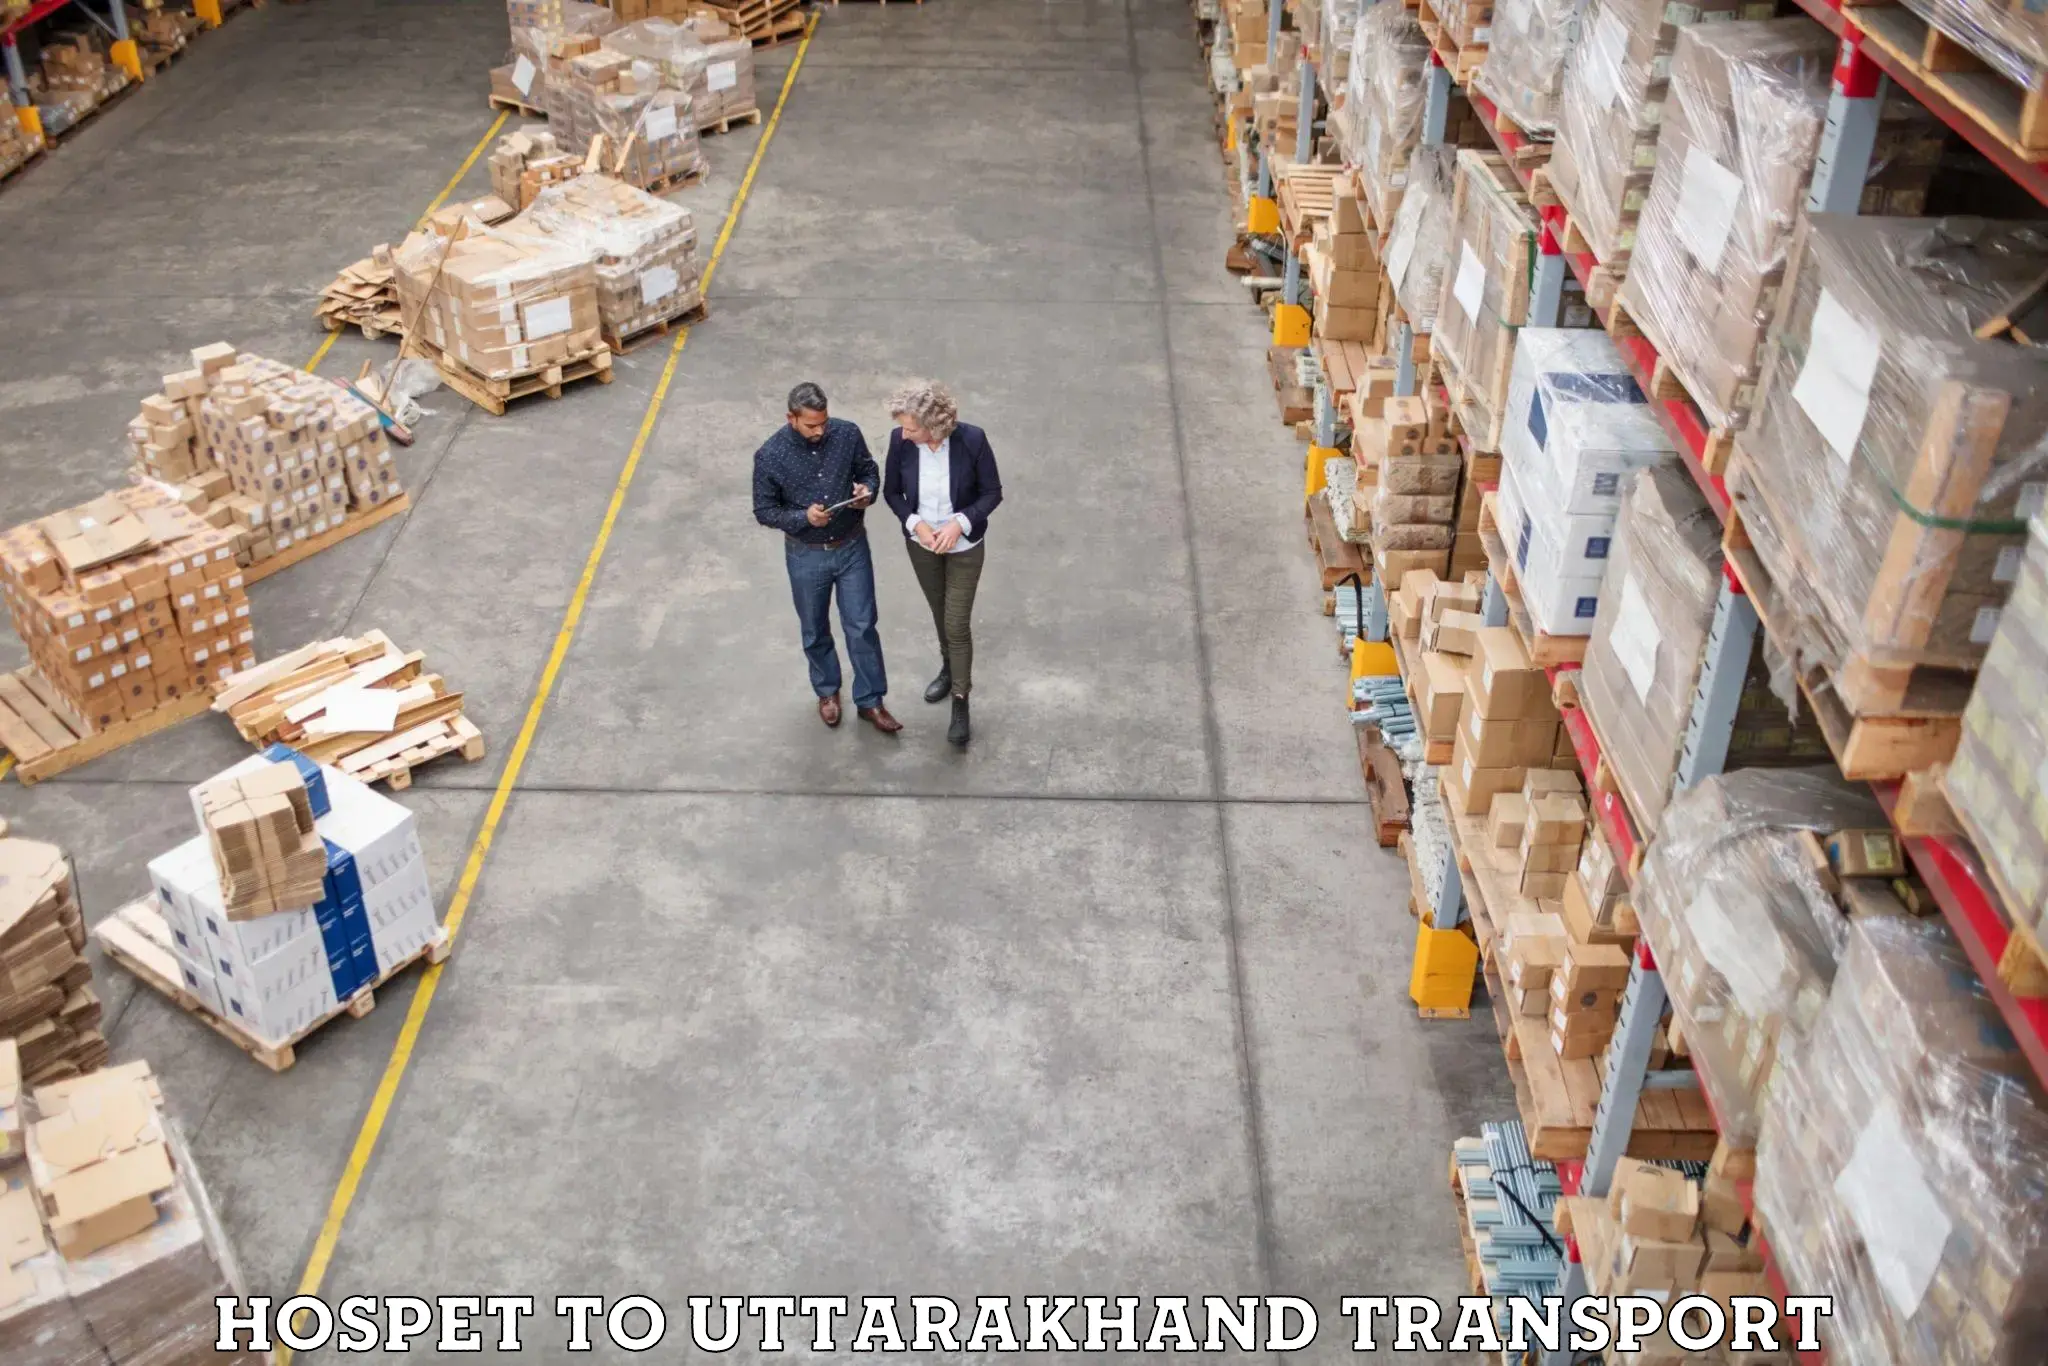 Part load transport service in India Hospet to Dehradun